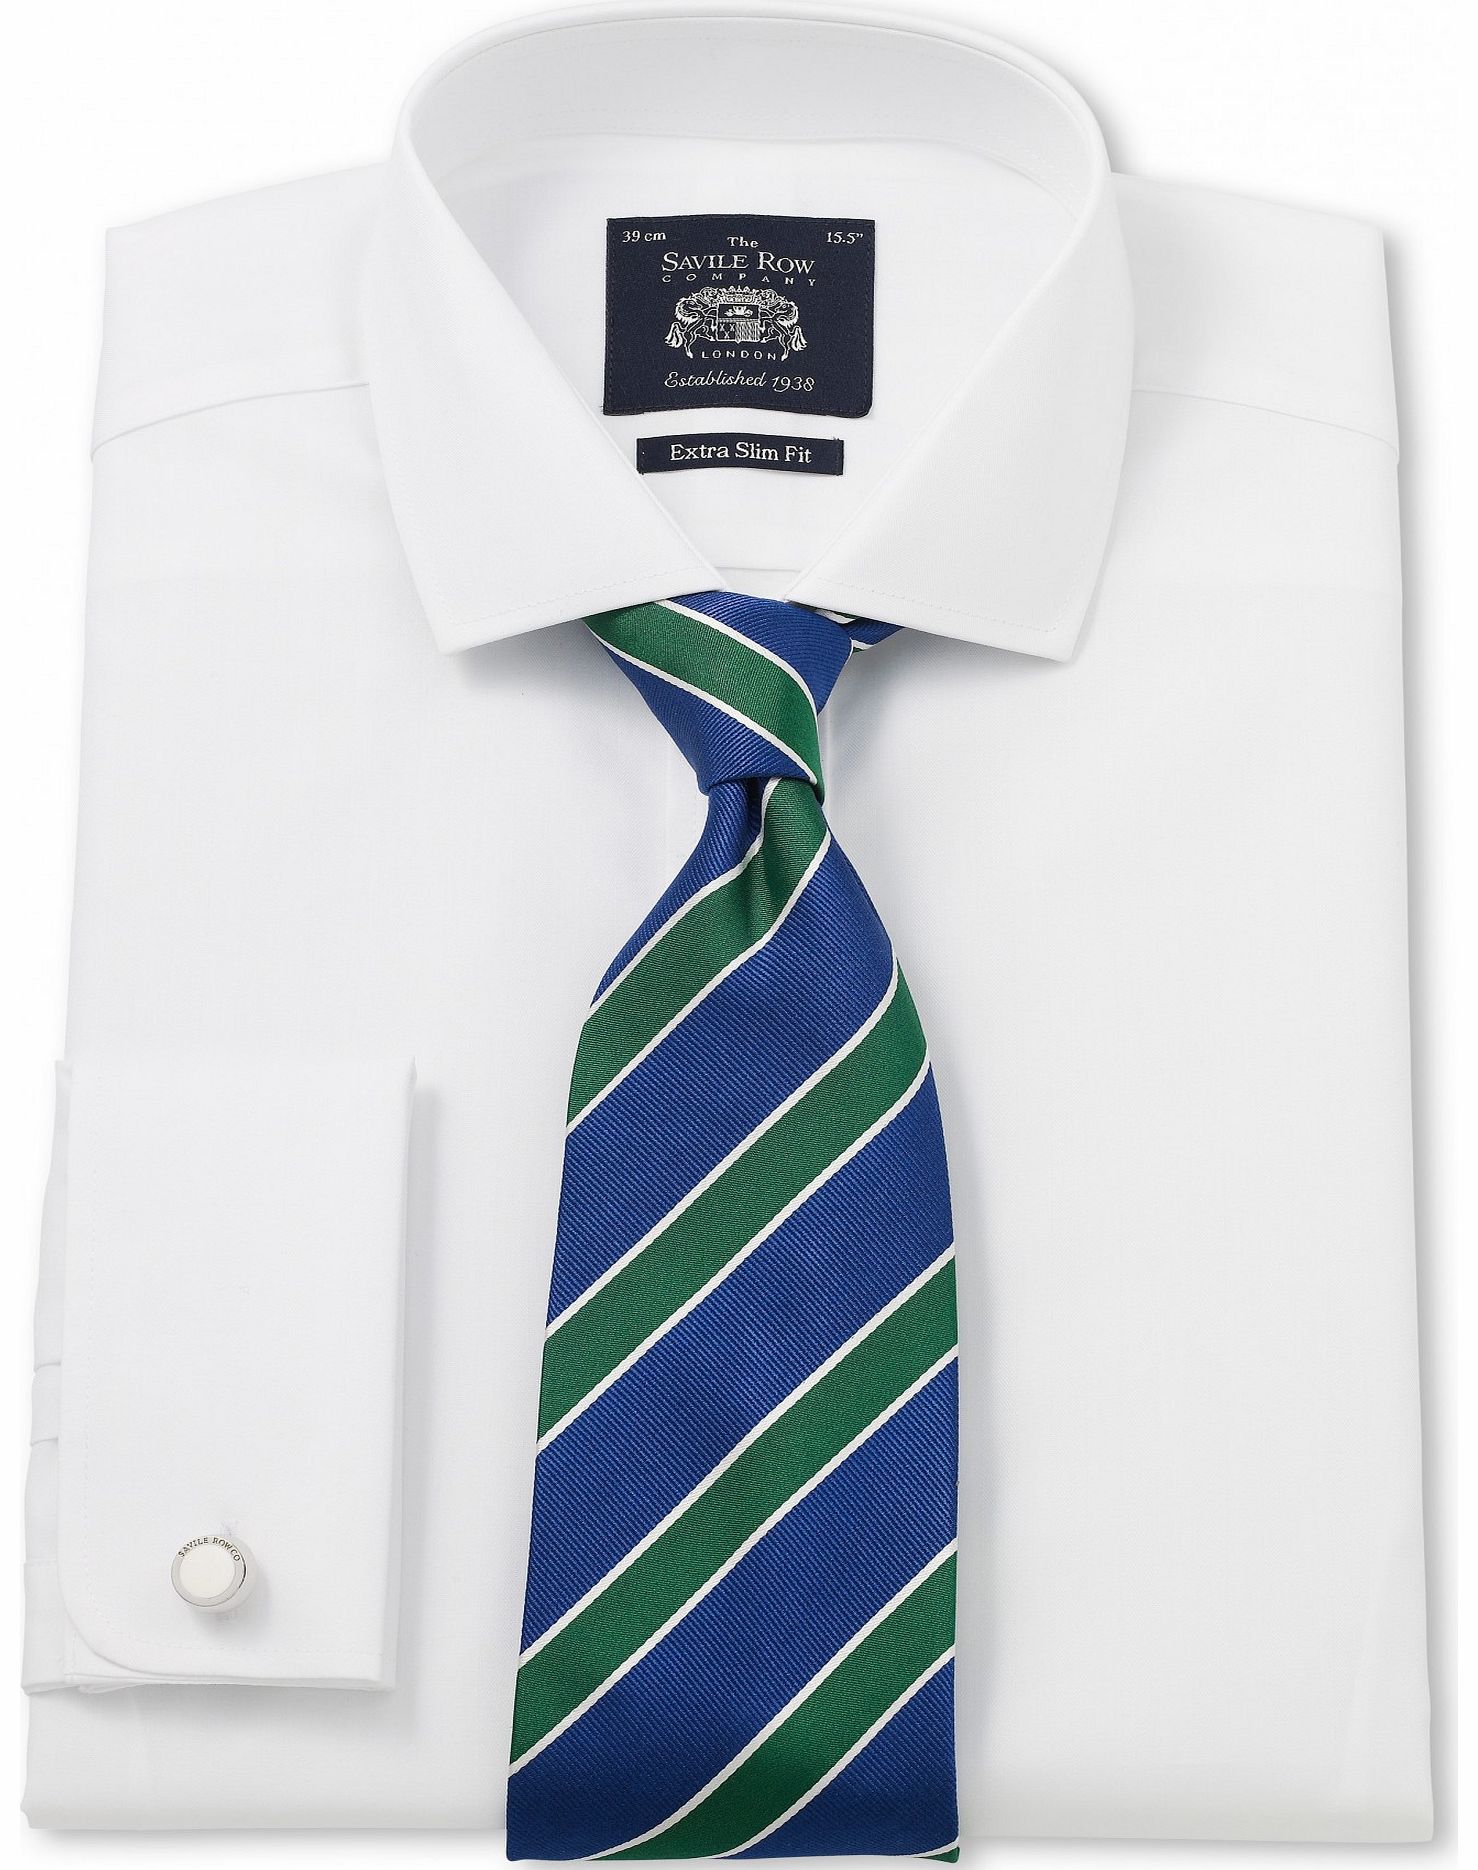 Savile Row Company White Luxury Herringbone Extra Slim Fit Shirt